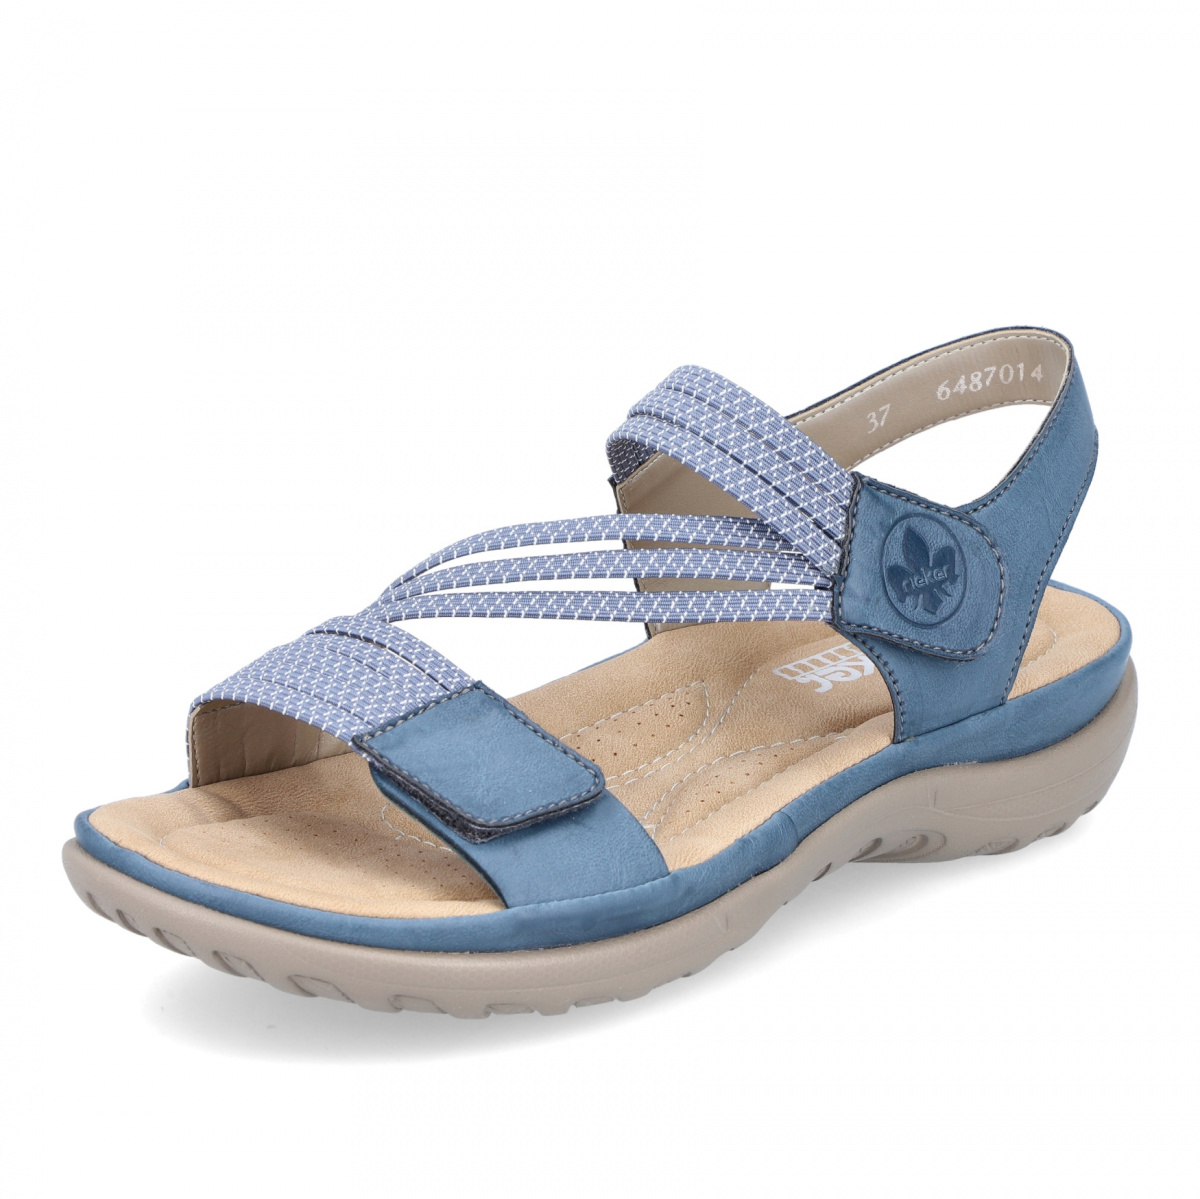 detail Dámské sandály RIEKER 64870-14 modrá S4